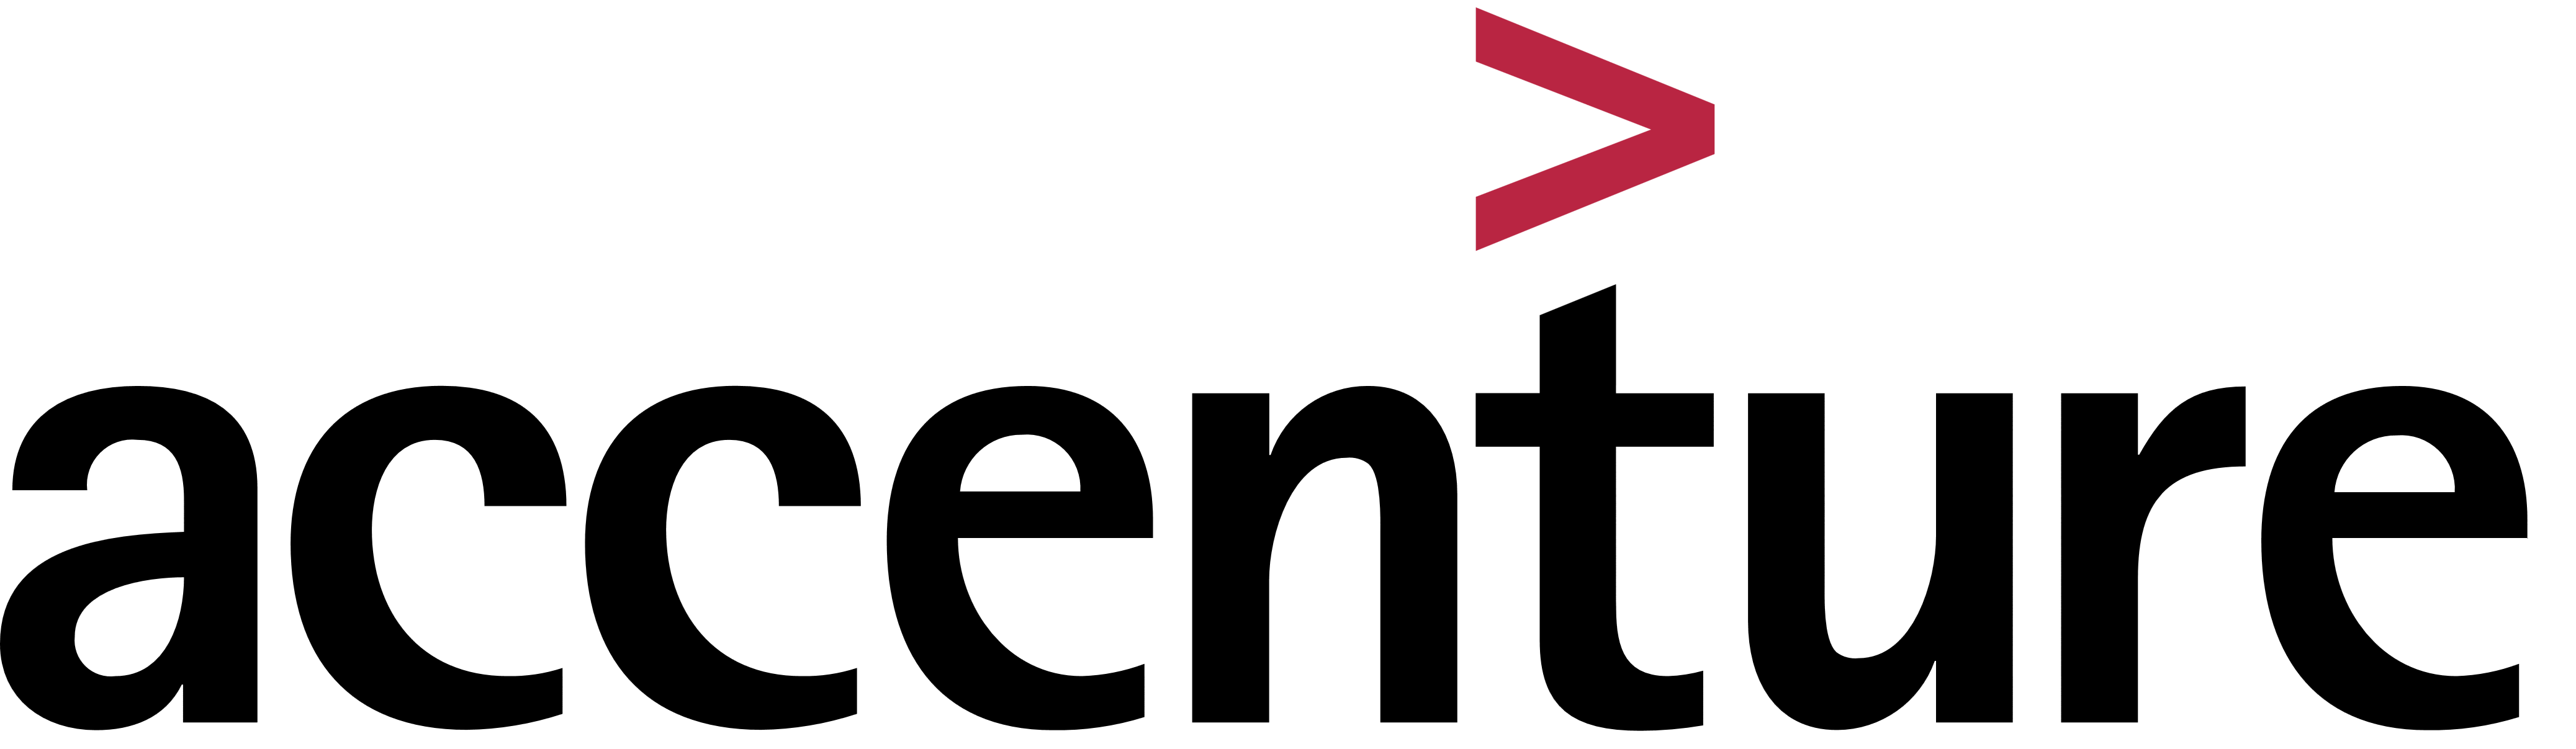 Accenture logo, logotype